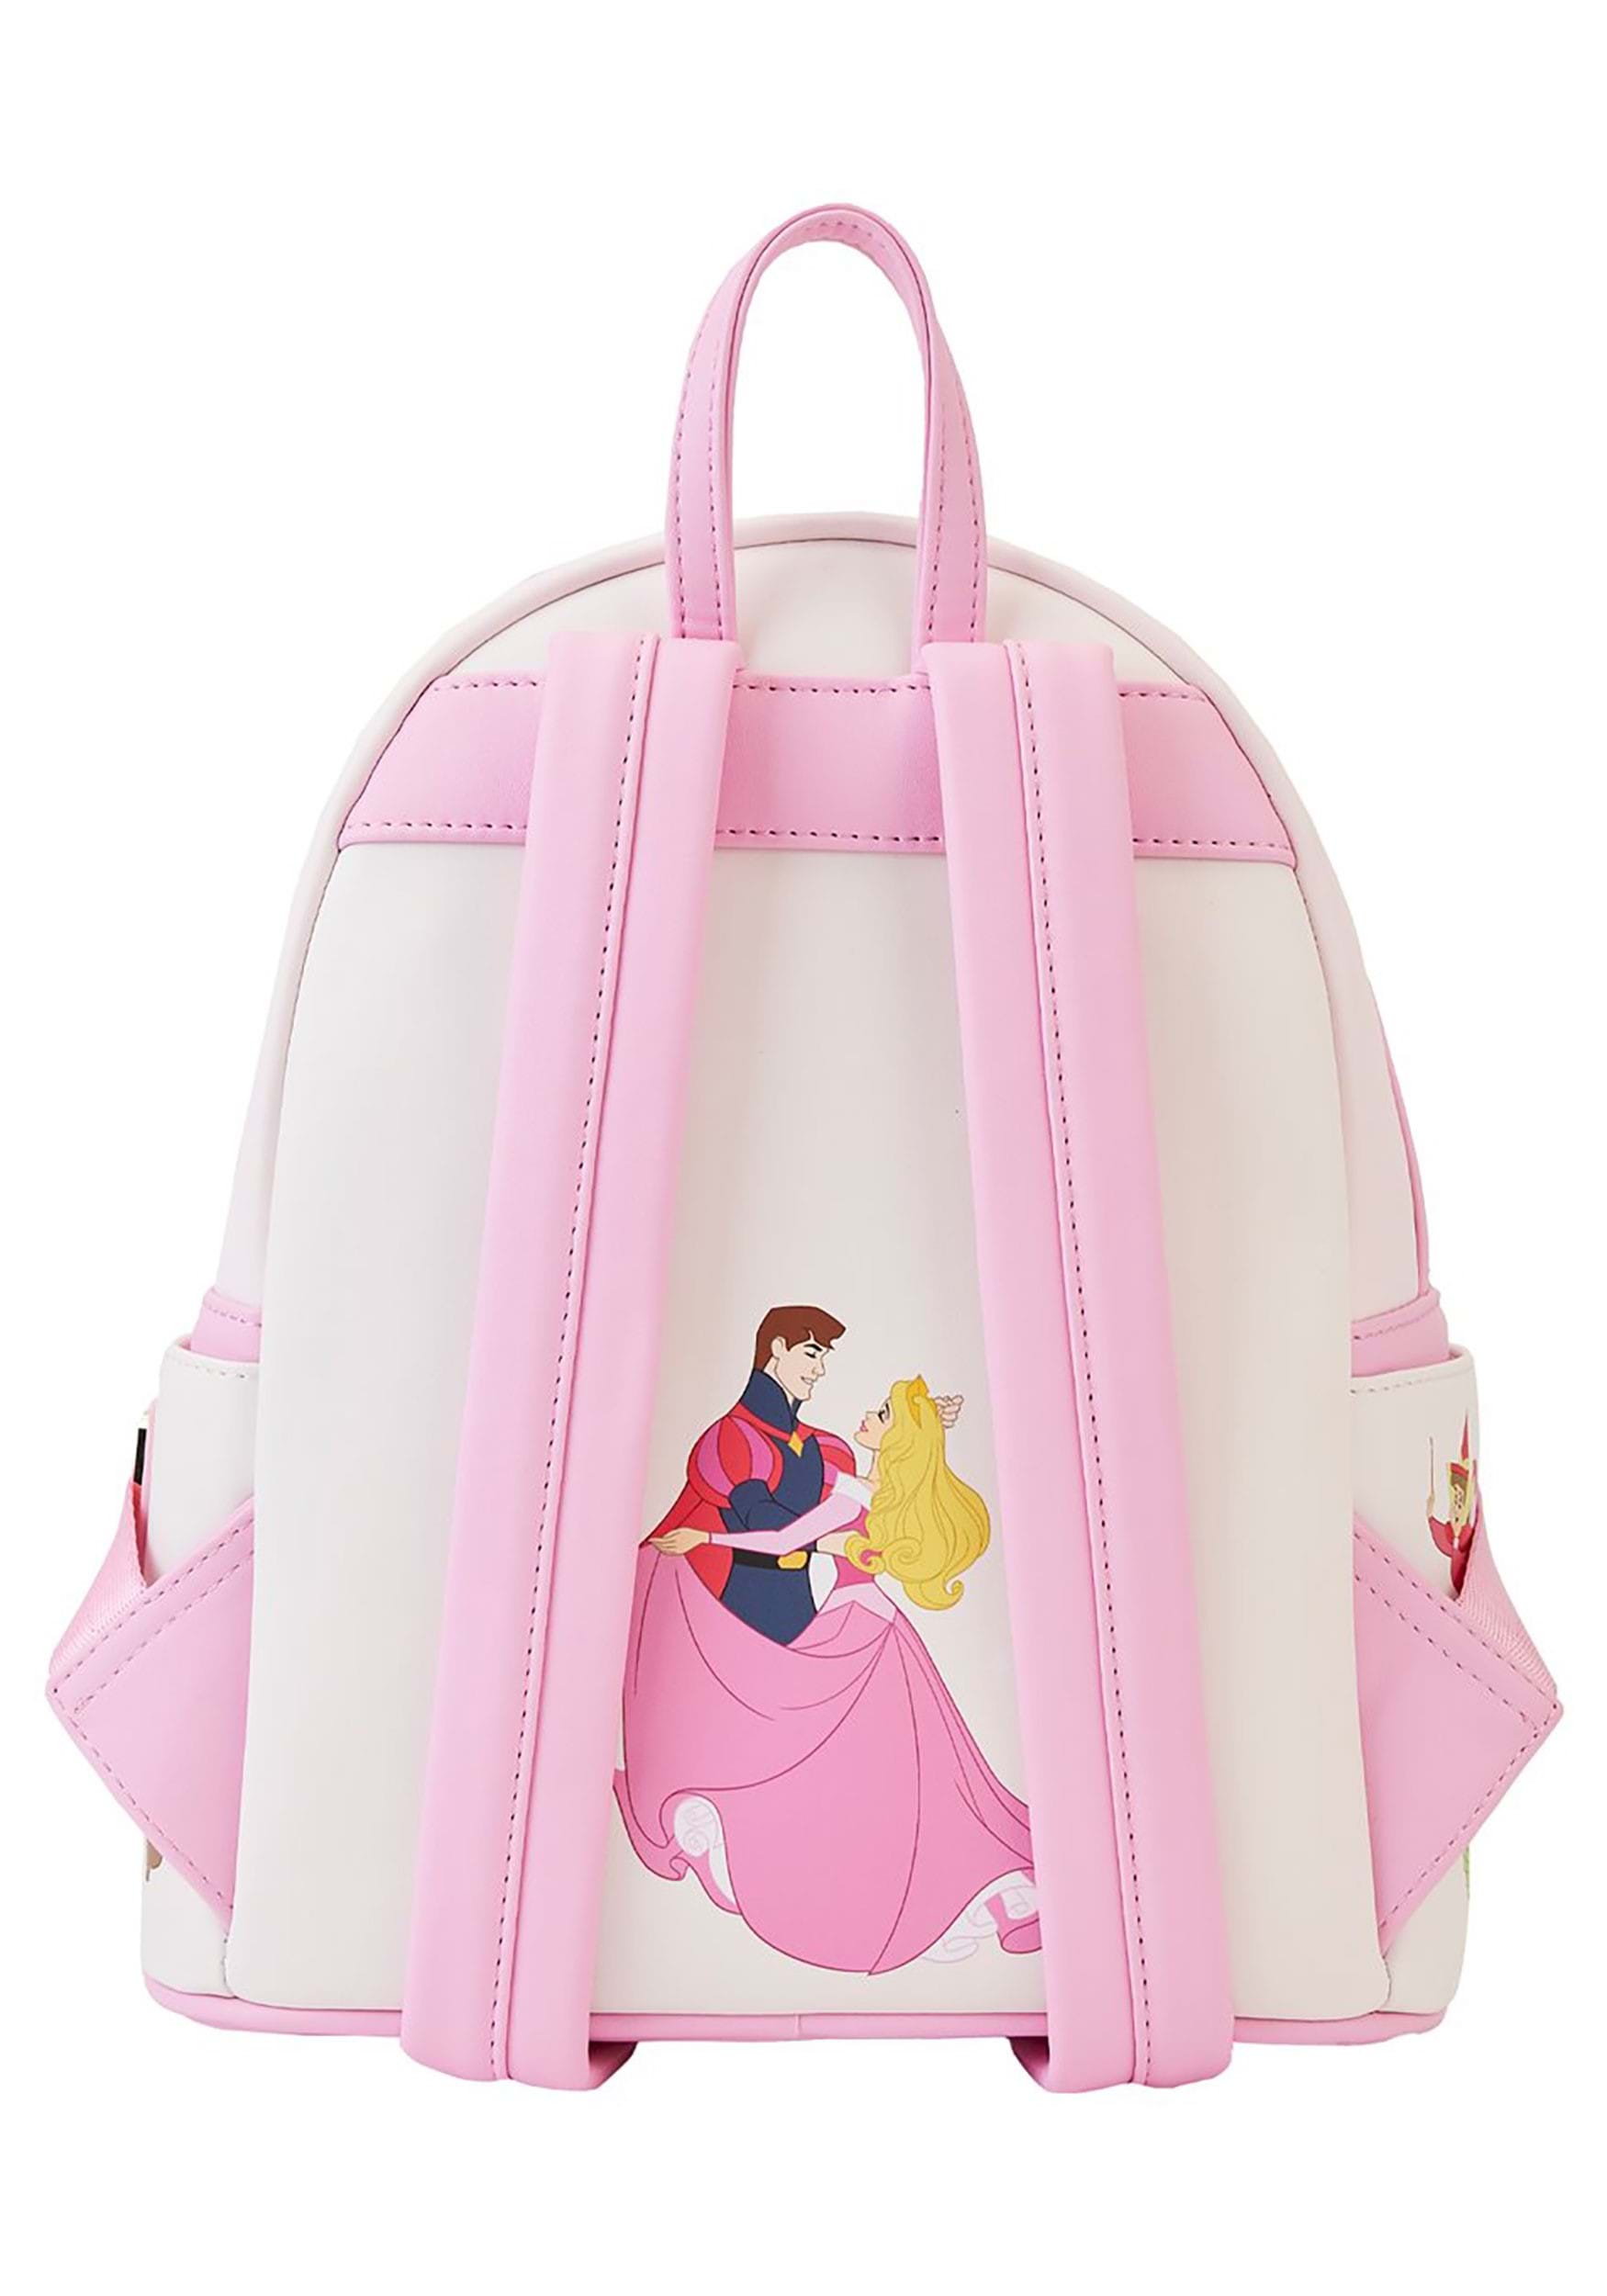 Sleeping Beauty Trick or Treat Bag - Personalized Princess Aurora